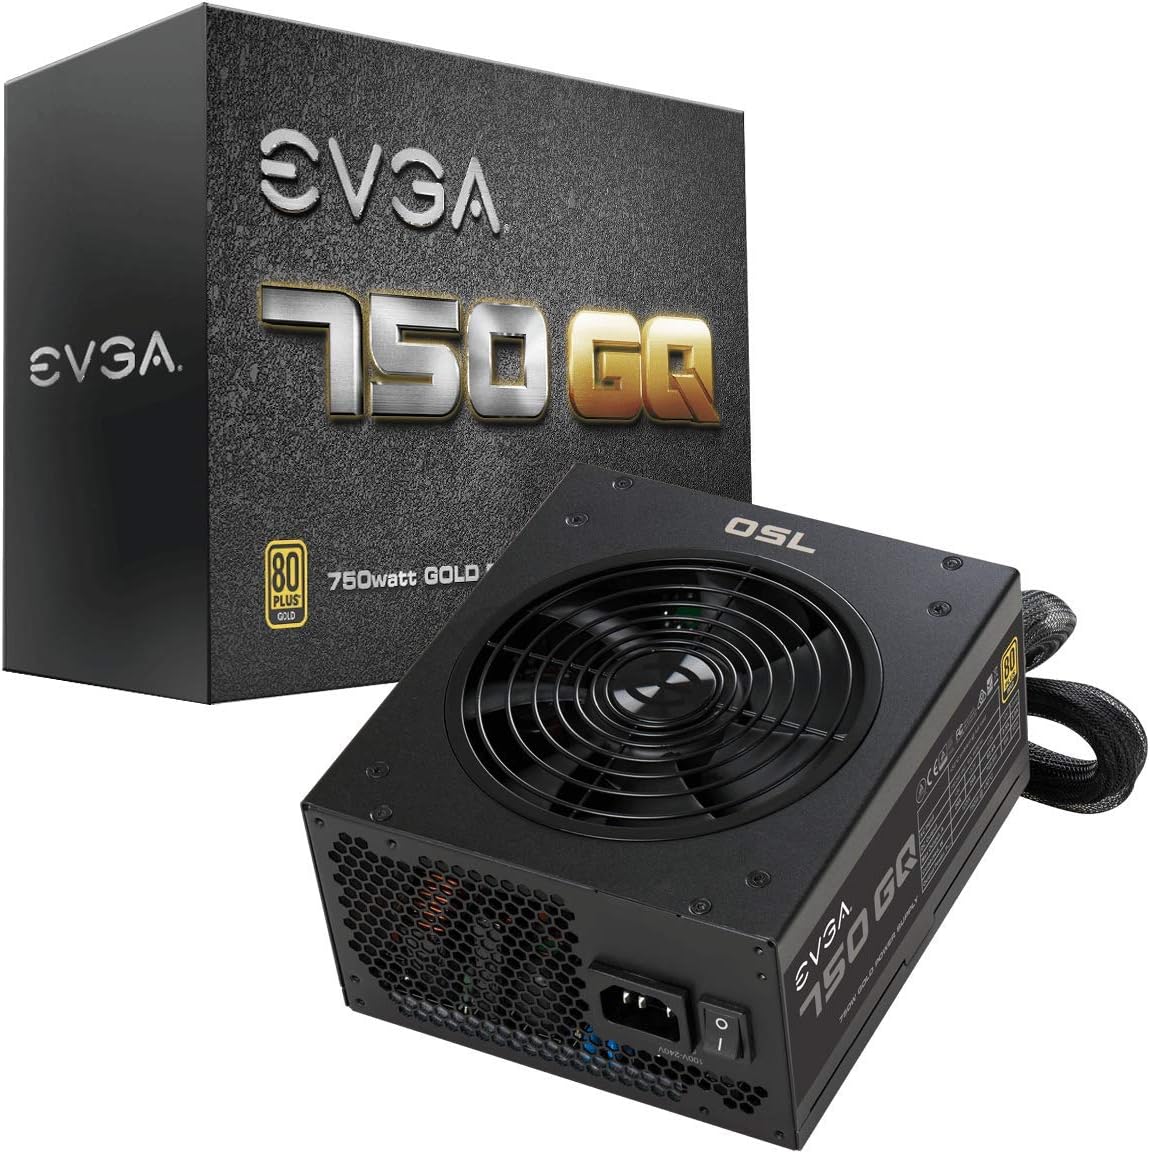 EVGA V1 750 GQ